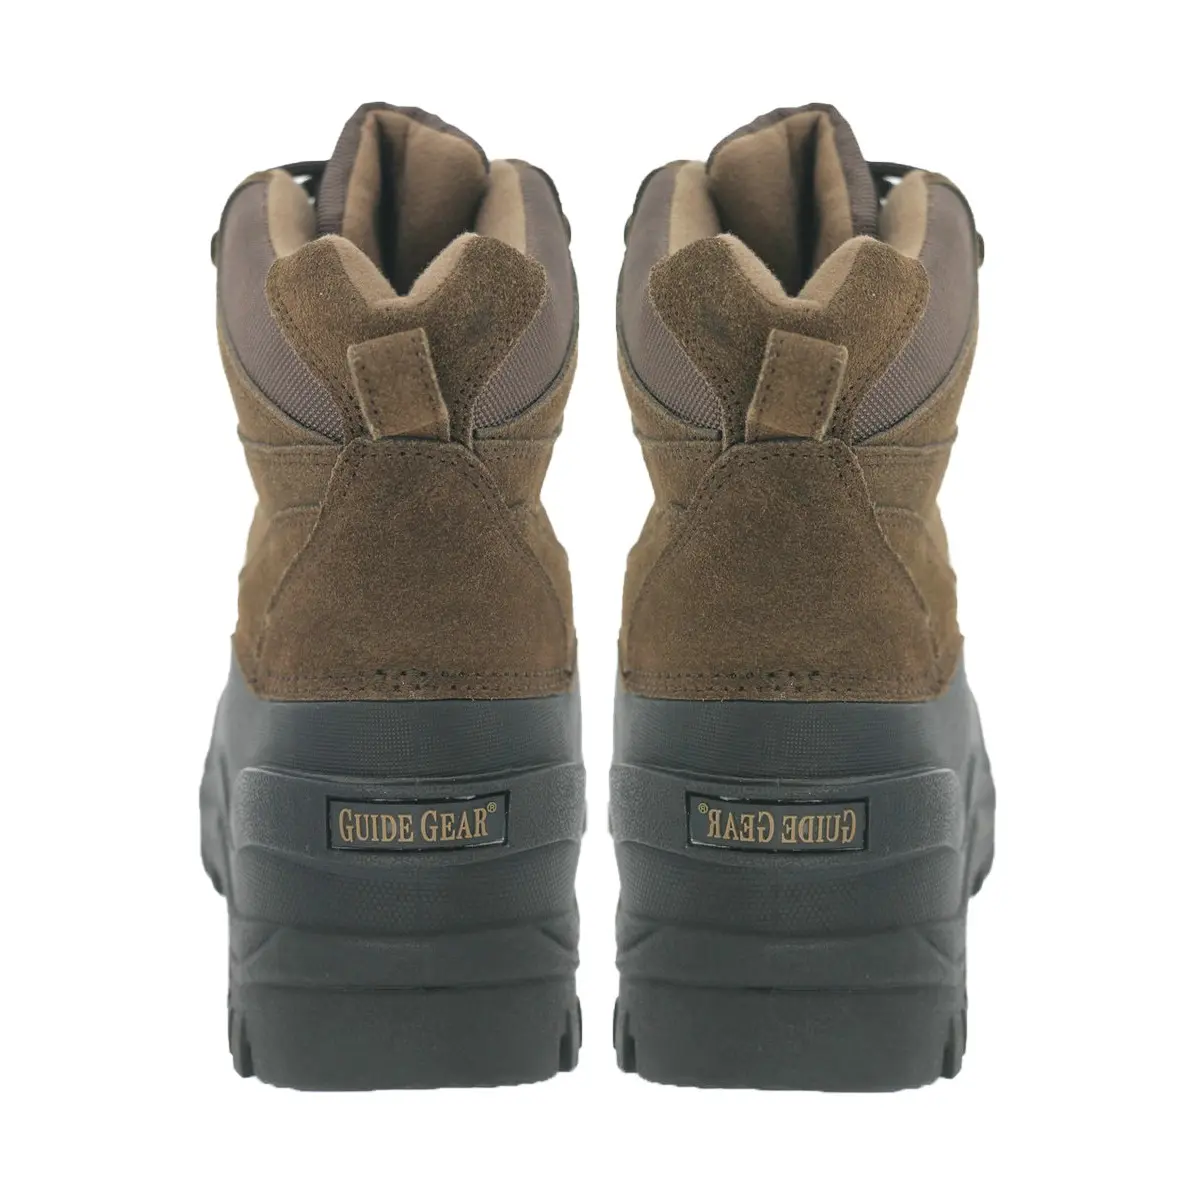 Waterproof insulated snow boots duck boots men